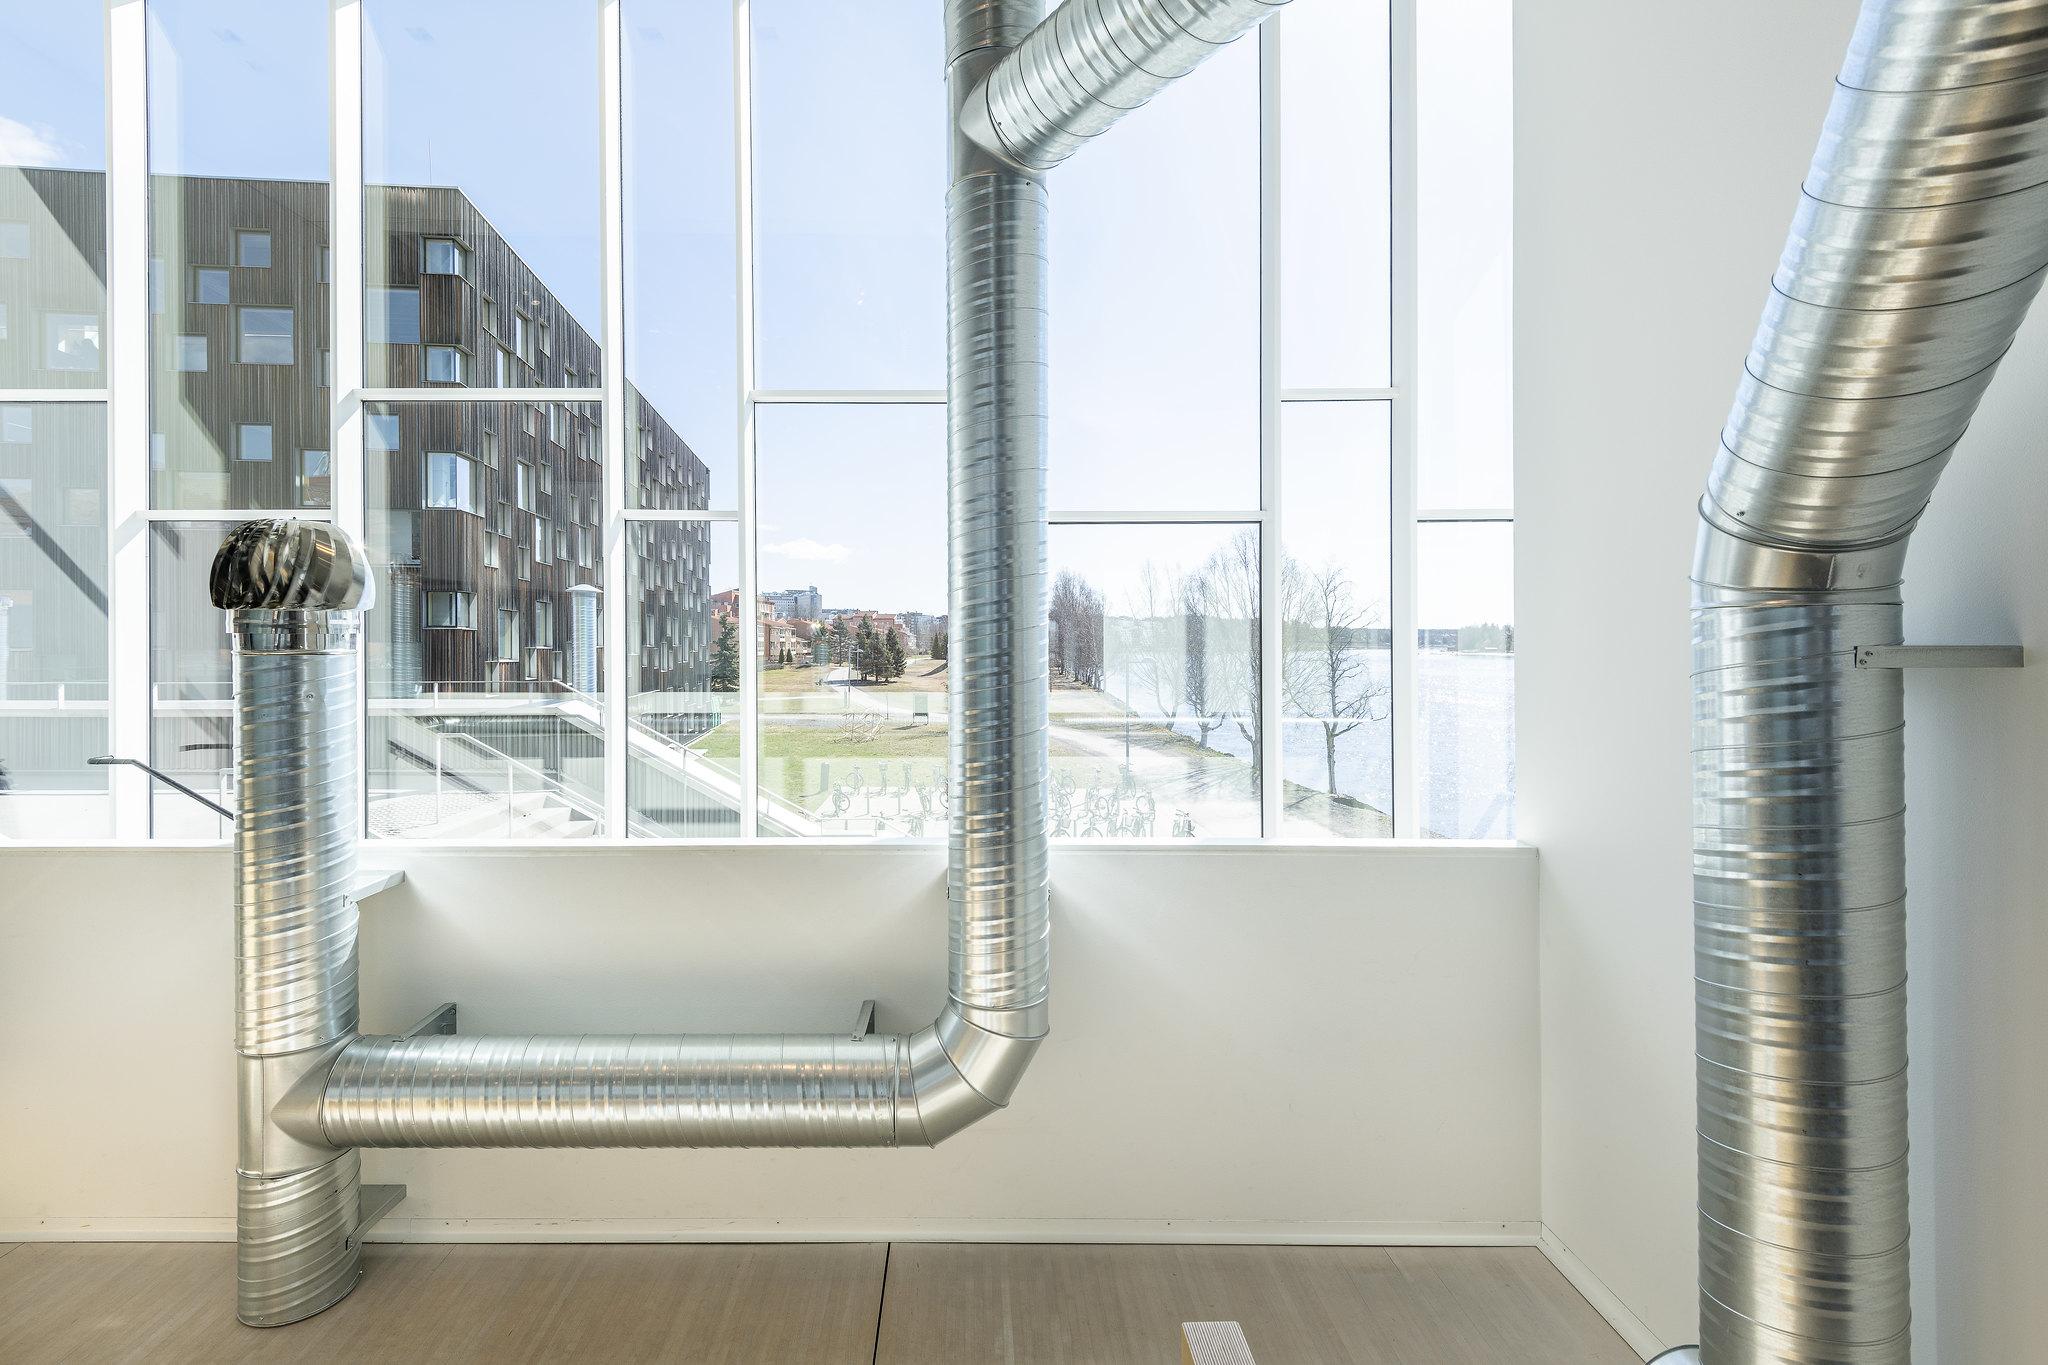 Nancy Holt's Ventilation System made of steel duct presented at Bildmuseet in Sweden